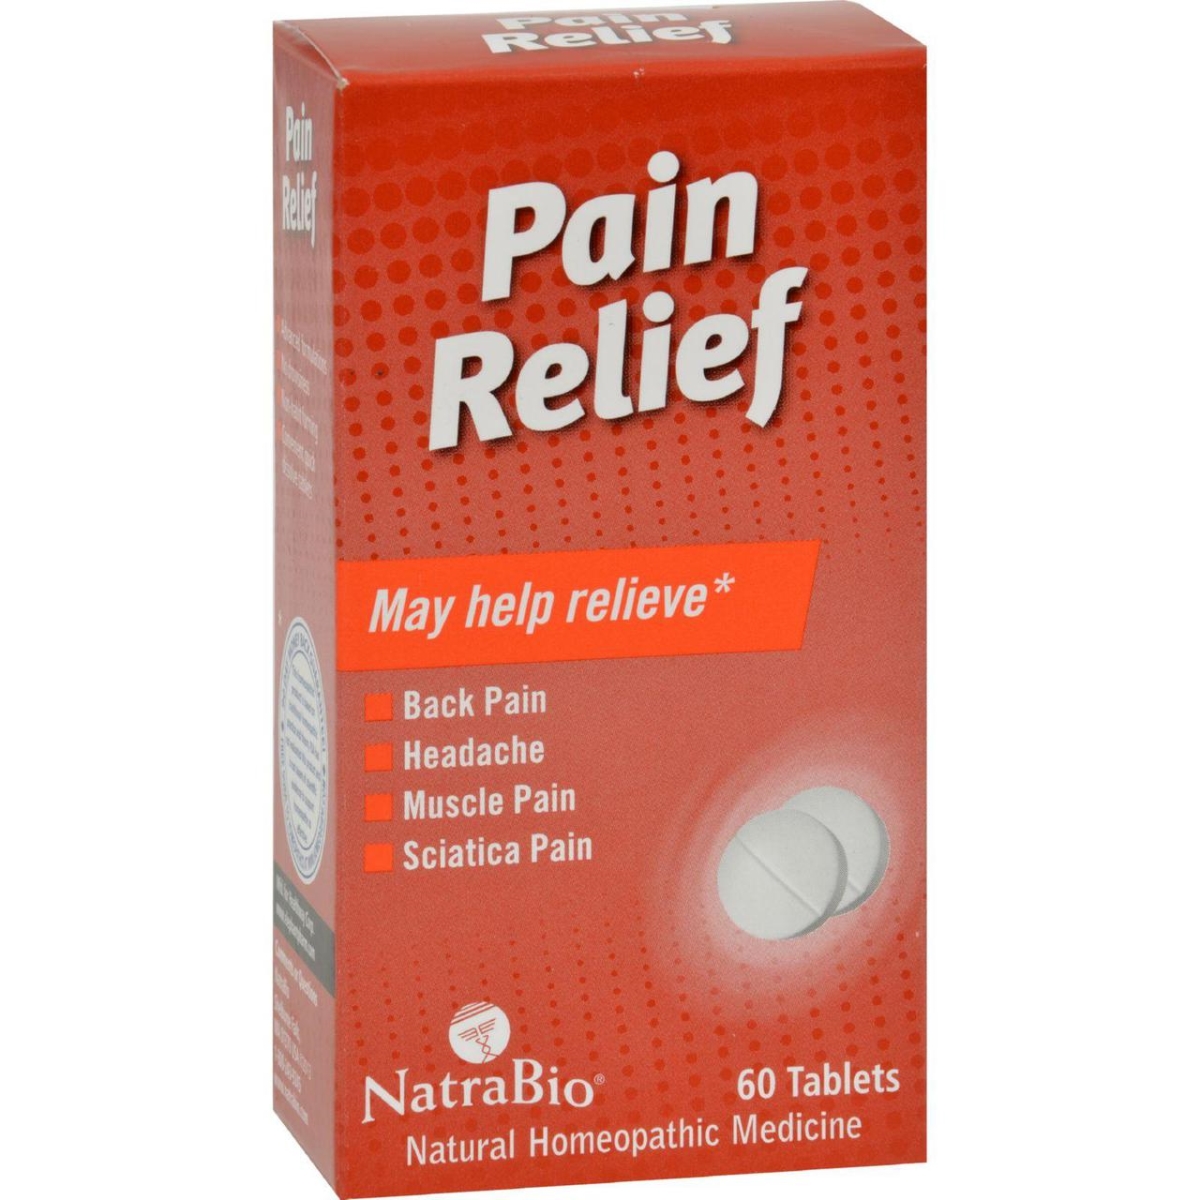 Natrabio Hg0737718 Pain Relief - 60 Tablets